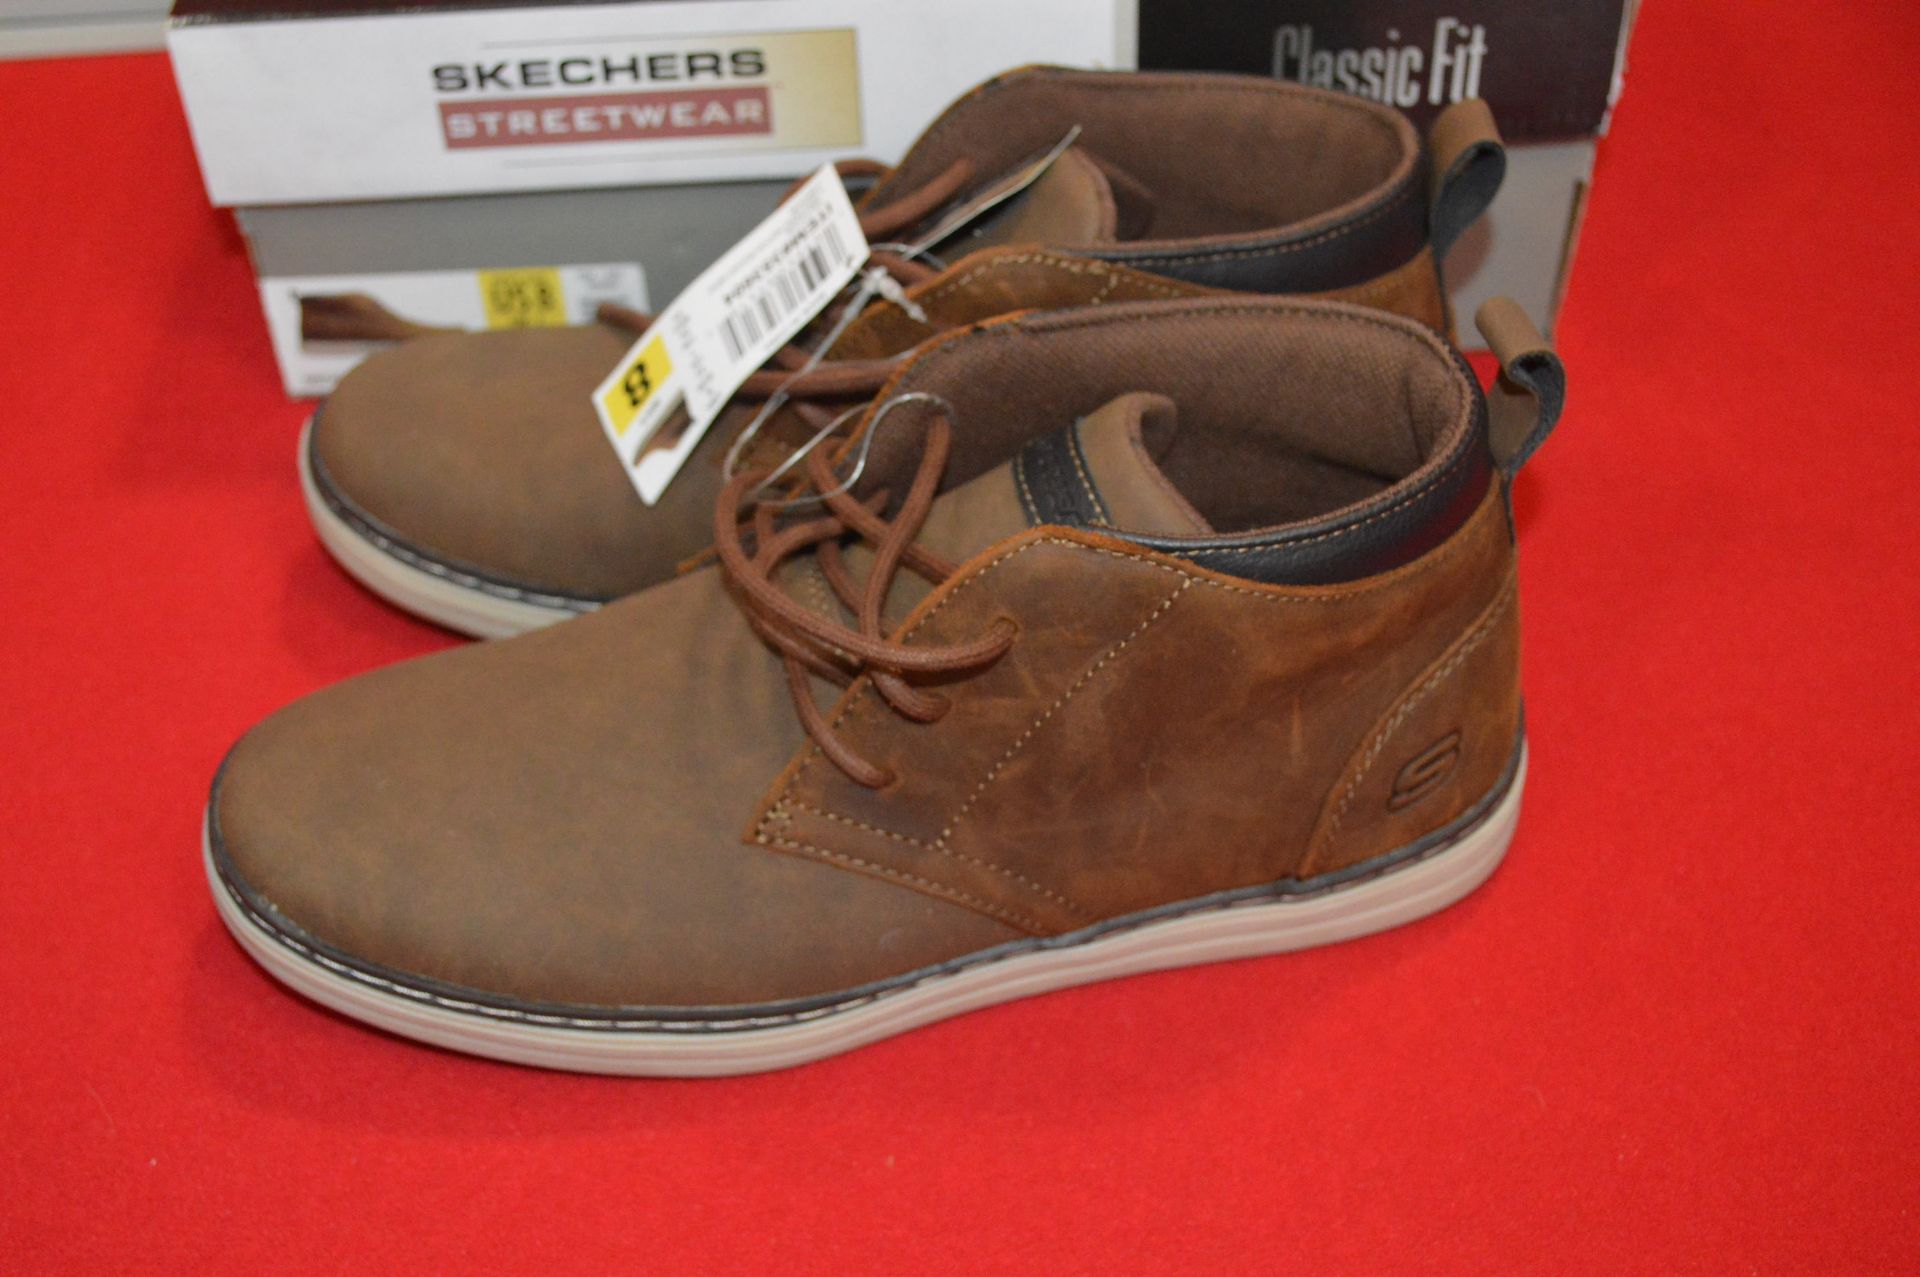 *Skechers Men’s Street Wear Brown Leather Ankle Boots Size: 7